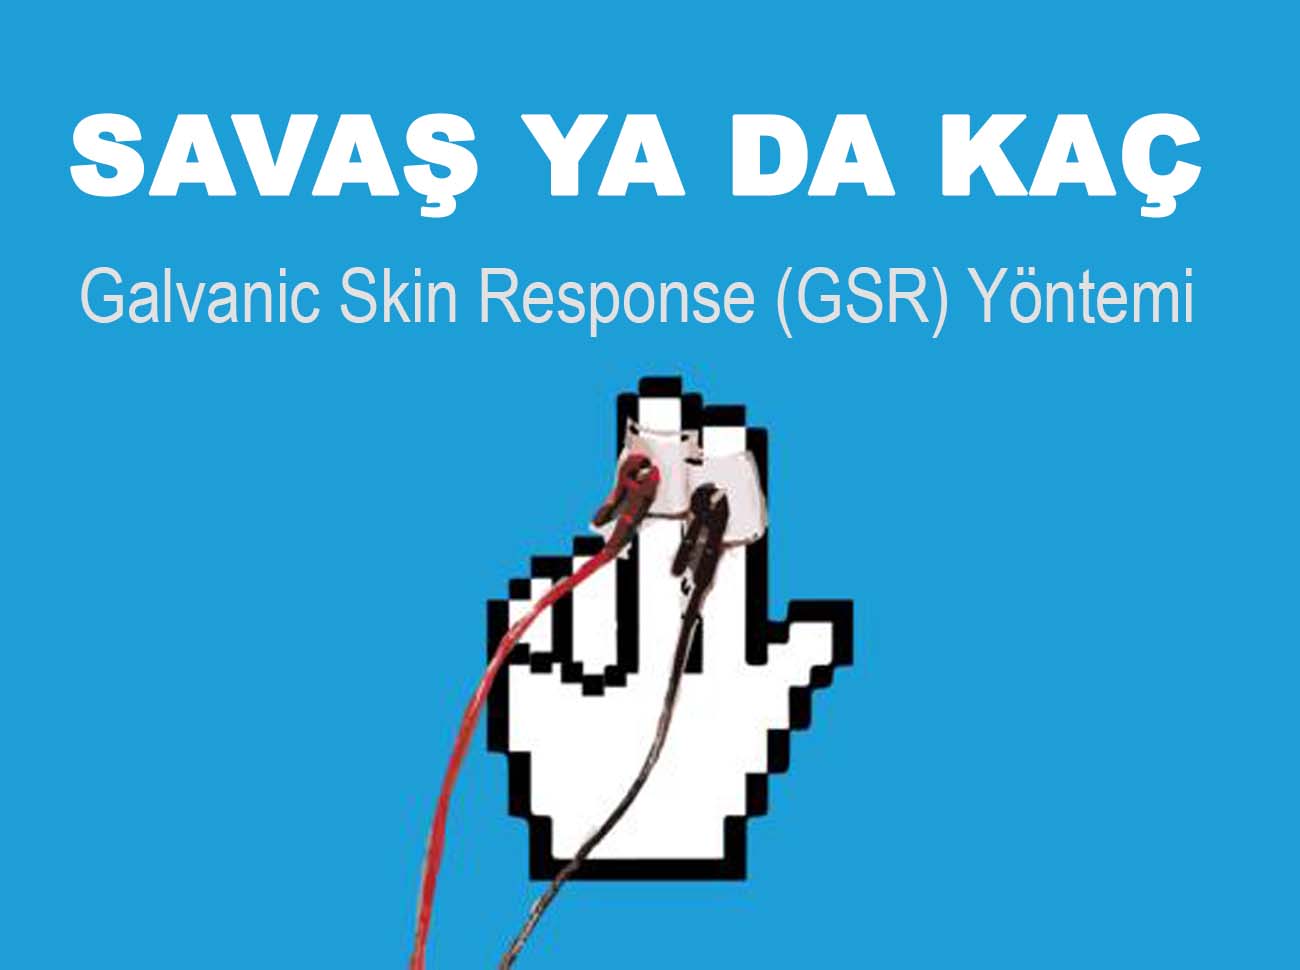 GSR (Galvanic Skin Response) Yöntemi